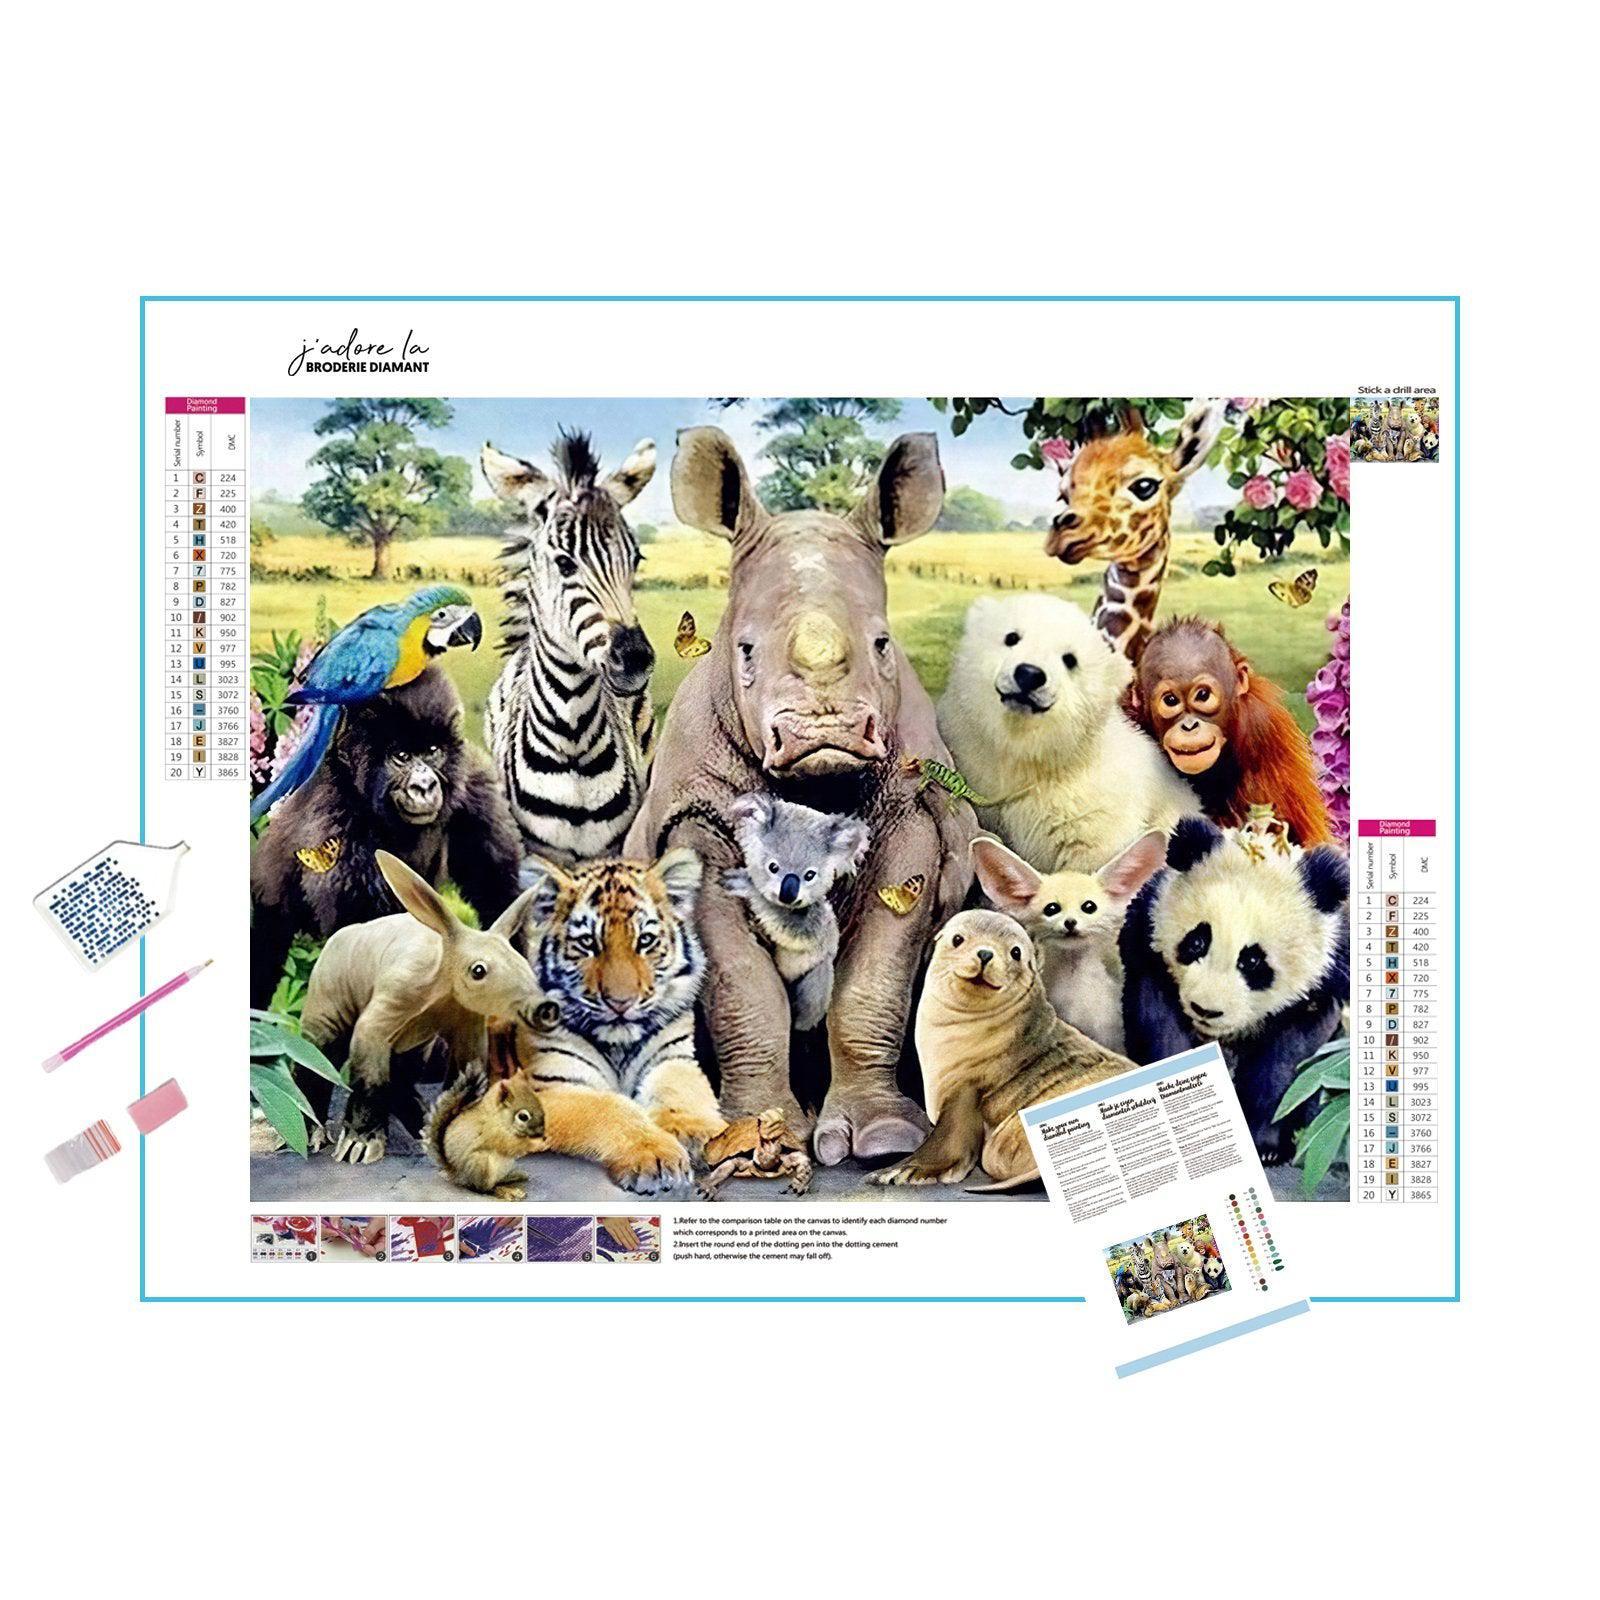 Celebrate wildlife diversity with Group Of Animals art.Group Of Animals - Diamondartlove